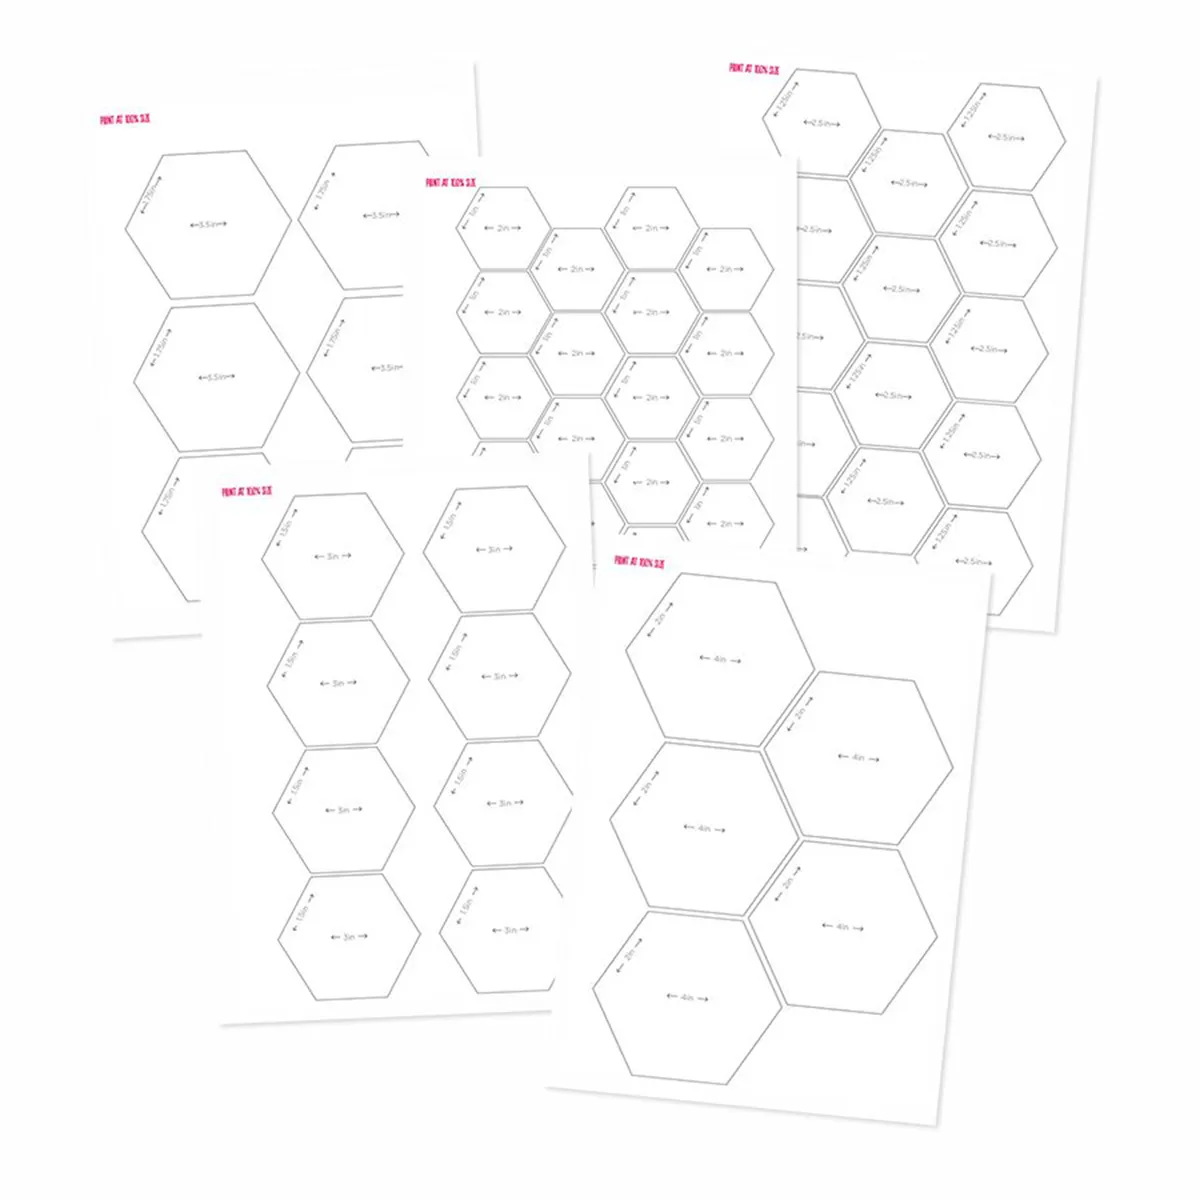 Free hexagon templates – printable hexagon patterns — Gathered  Free paper  piecing patterns, English paper piecing quilts, Paper piecing quilts